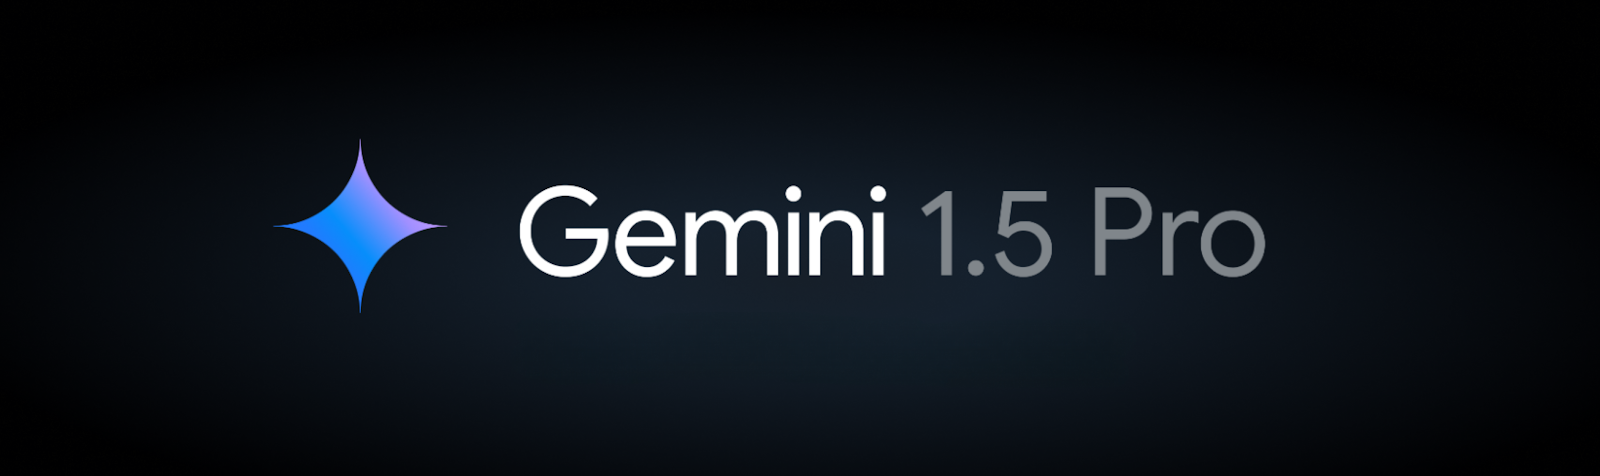 Google เปิดตัว Gemini 1.5 Pro